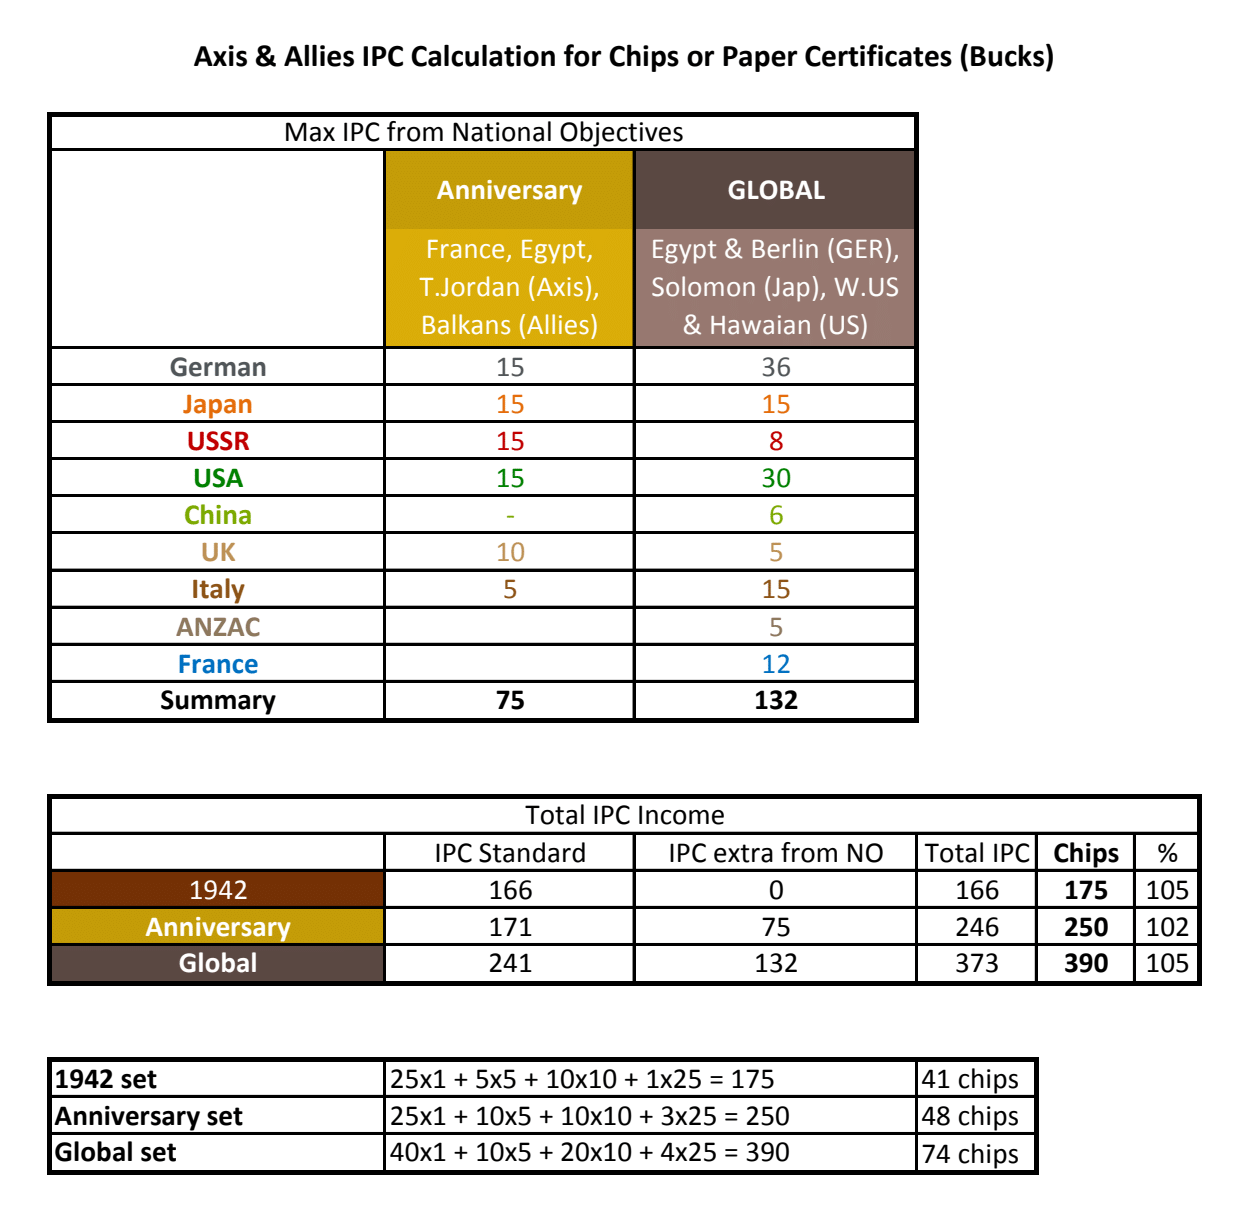 A&A IPC Calculation photo.png